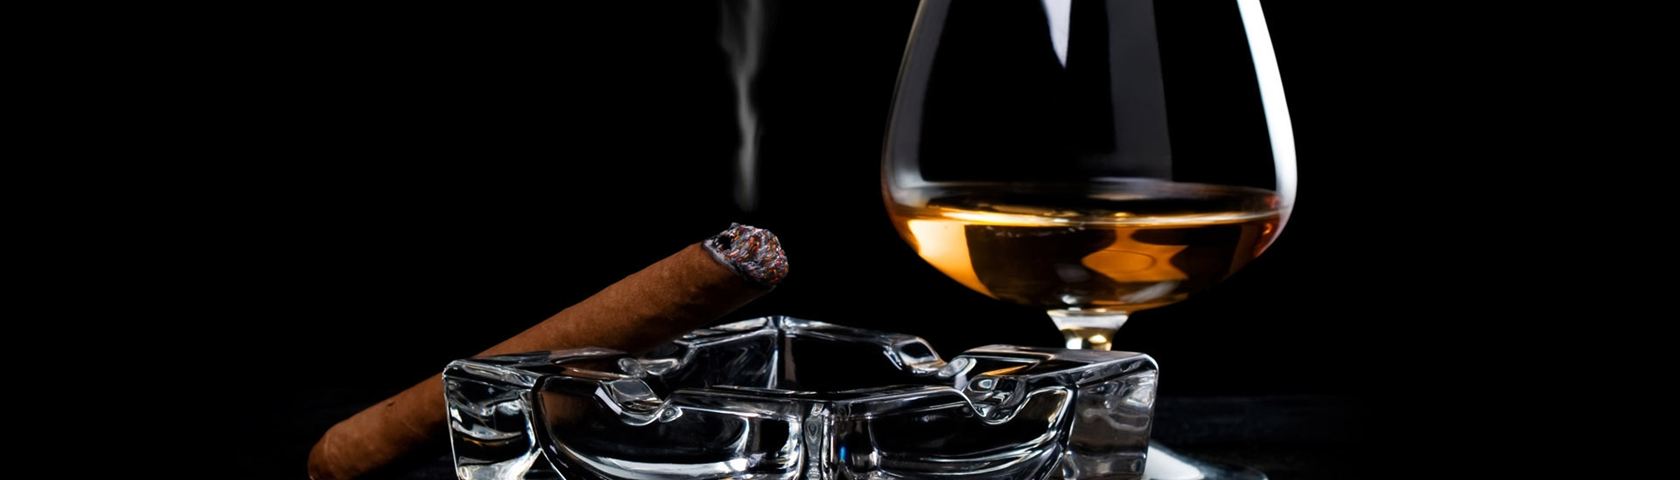 Cigar and Brandy